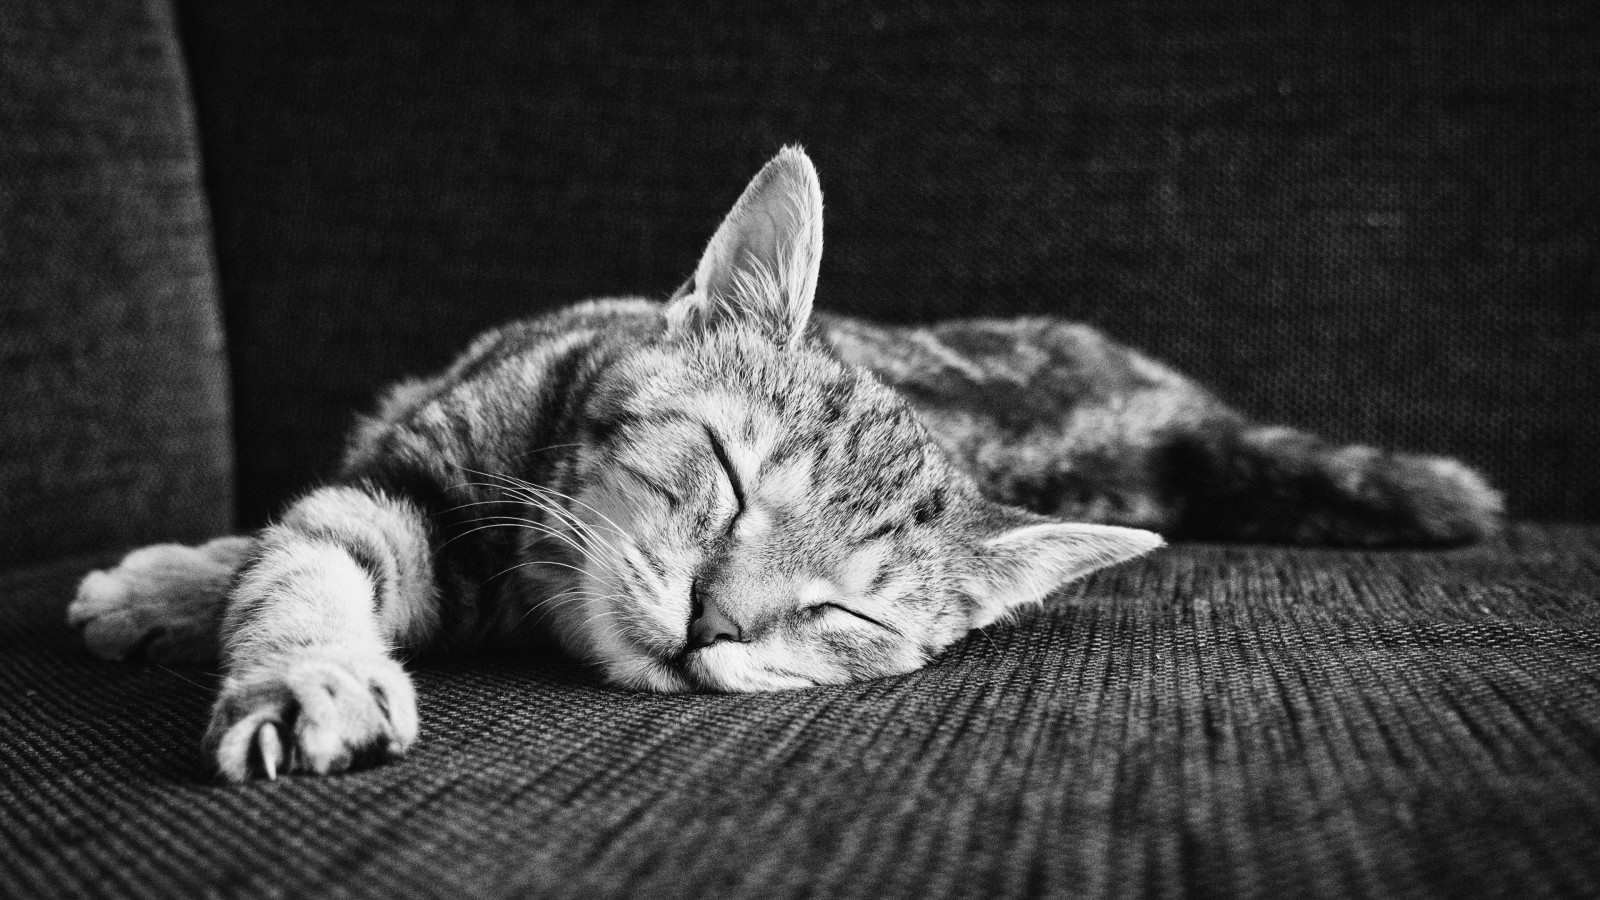 Zen of sleeping kitten wallpaper 1600x900